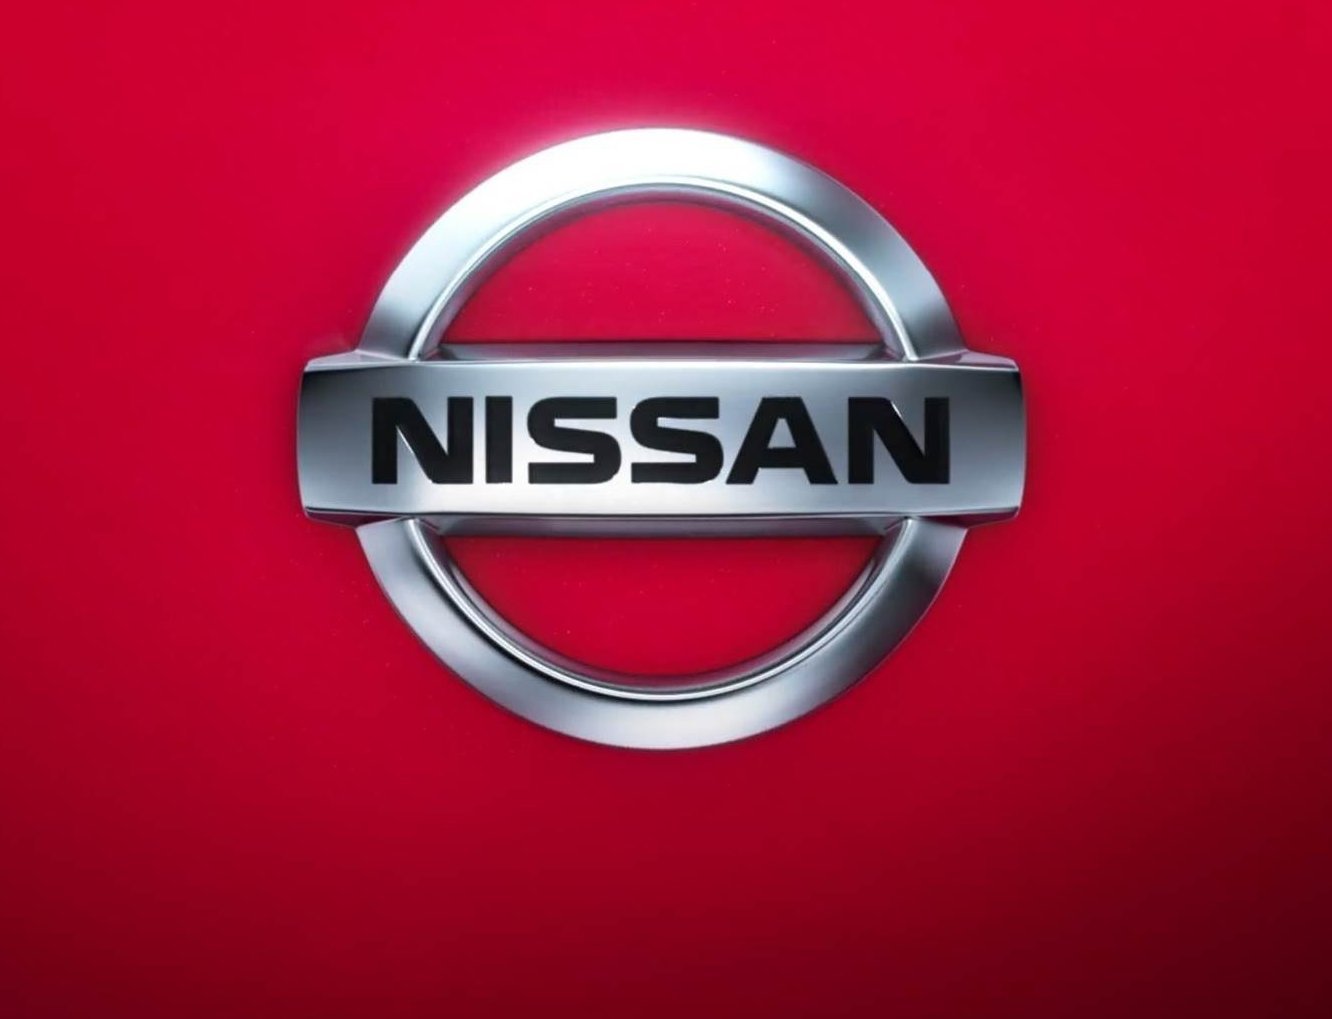 Nissan Sunny logo